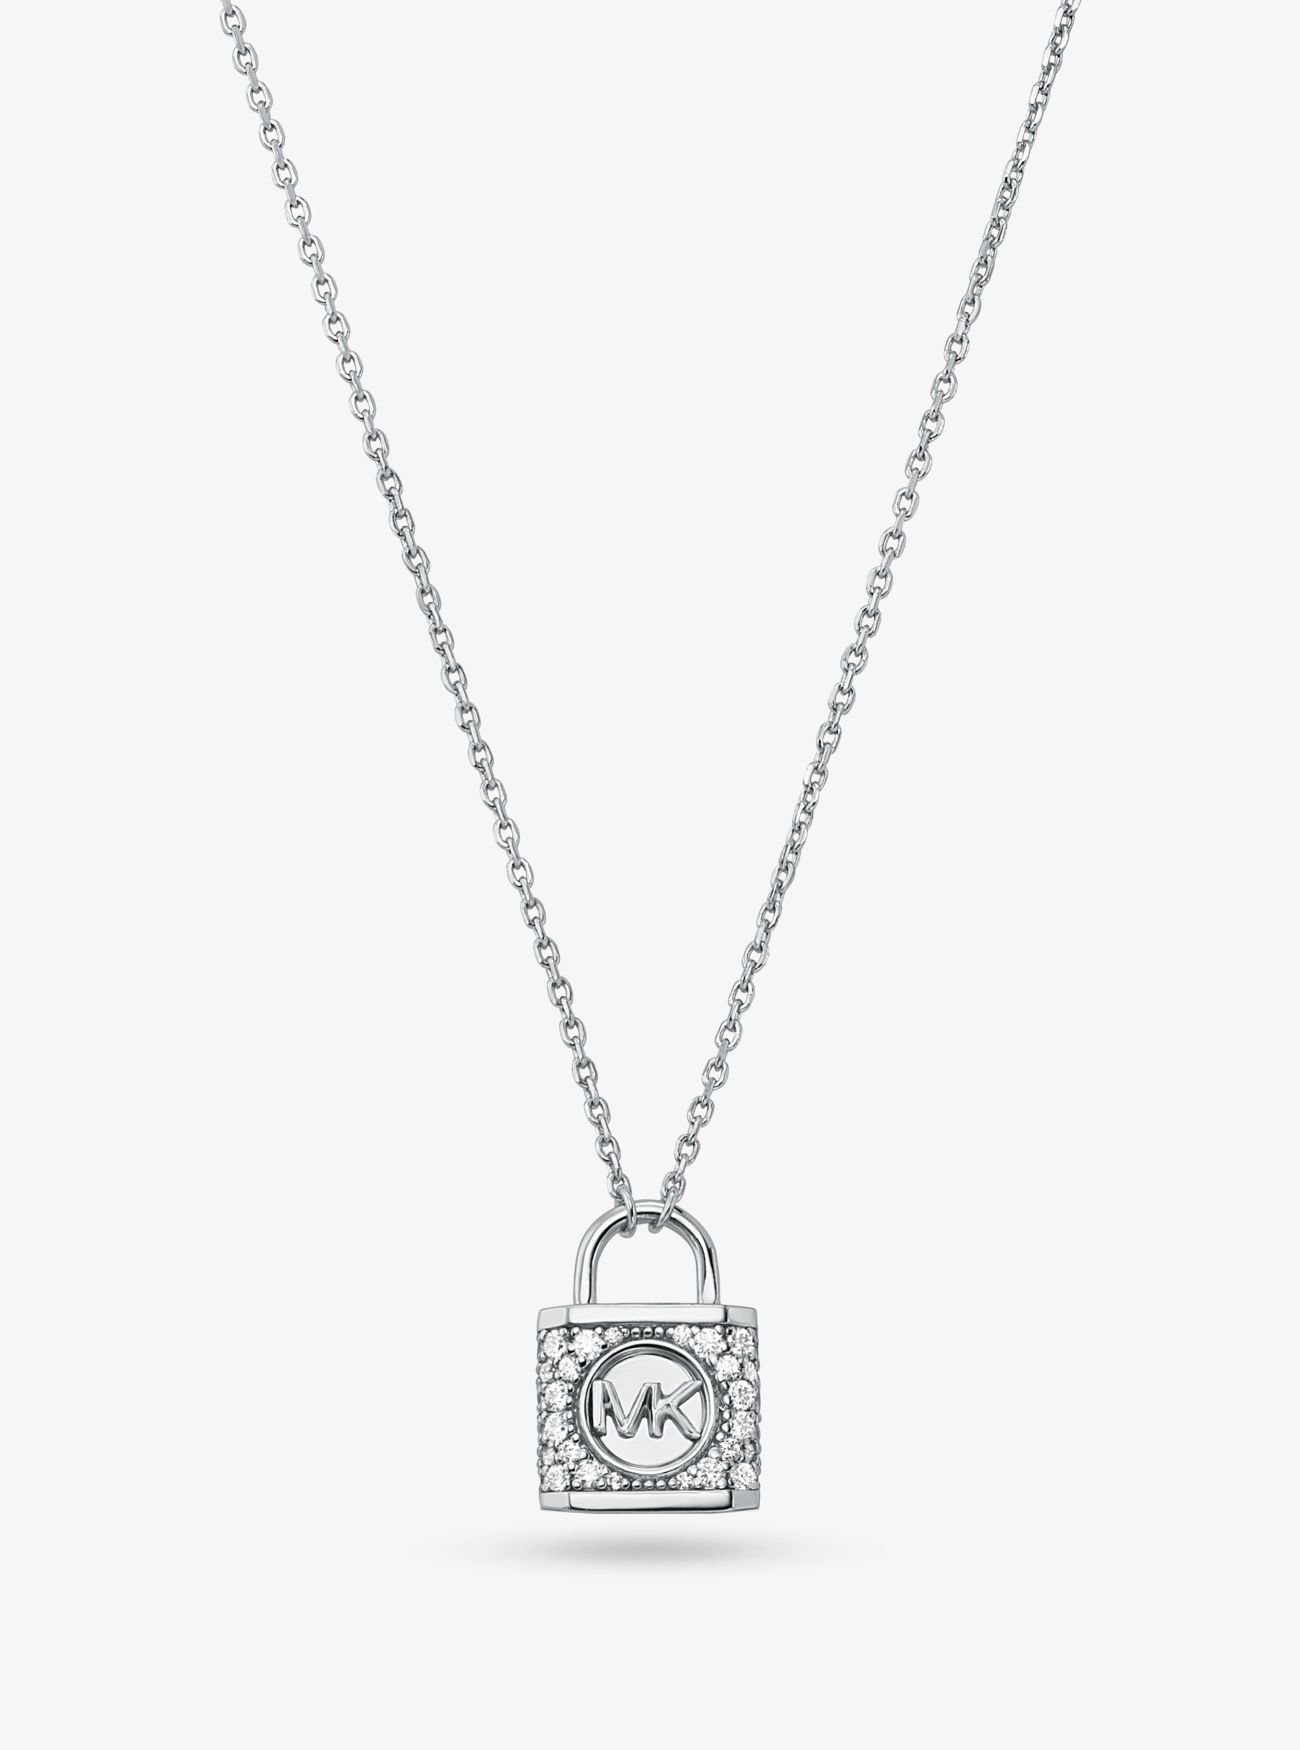 MK Precious Metal-Plated Sterling Silver Pavé Lock Necklace - Silver - Michael Kors